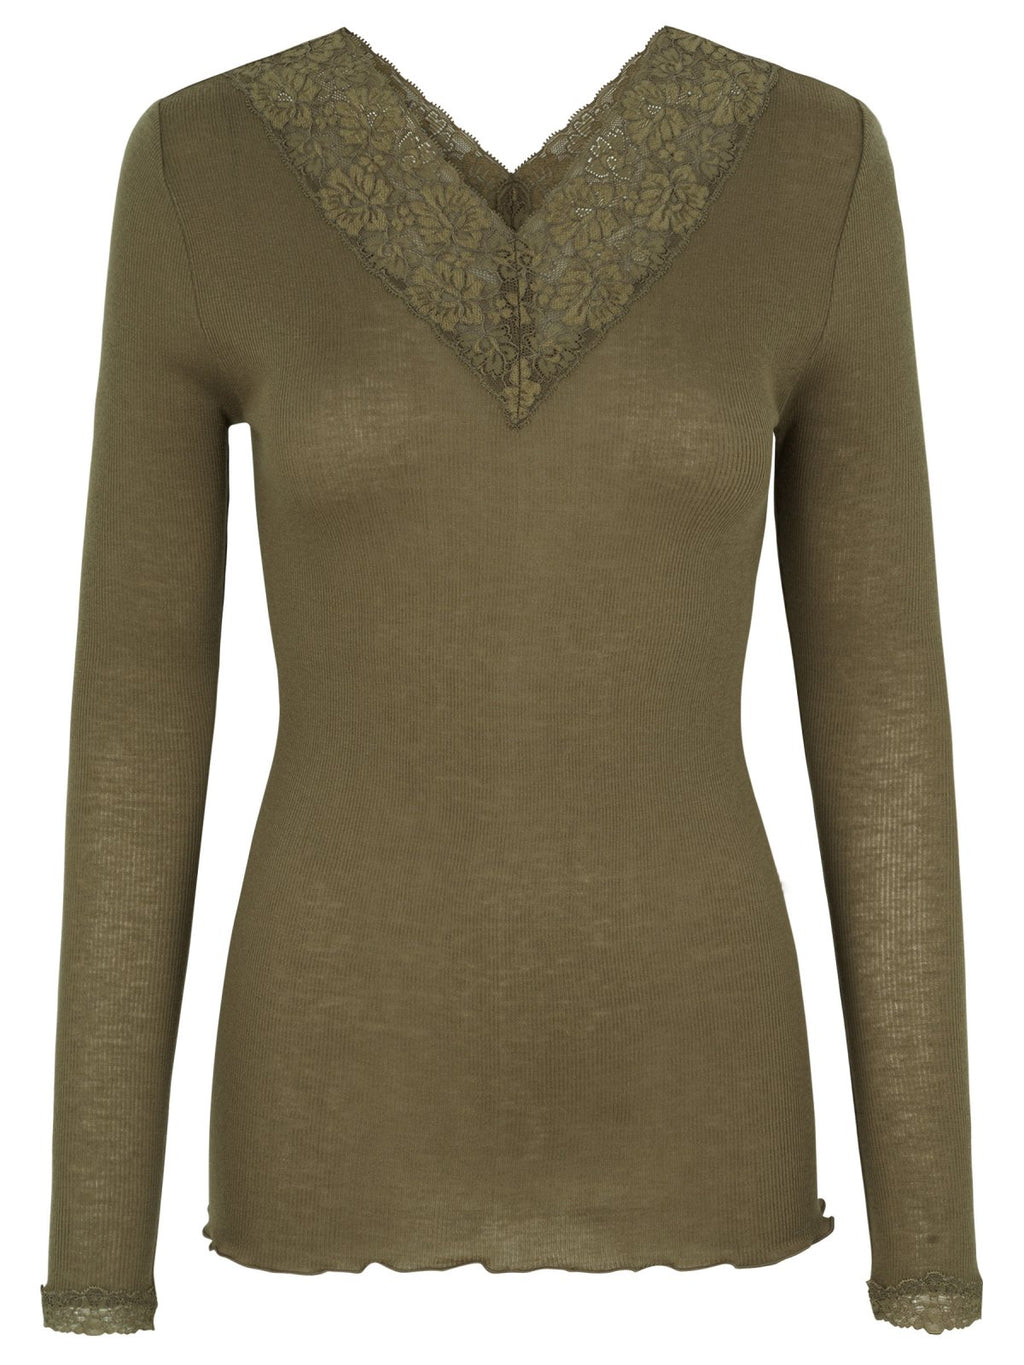 Rosemunde - wool blouse V-neck lace military olive green